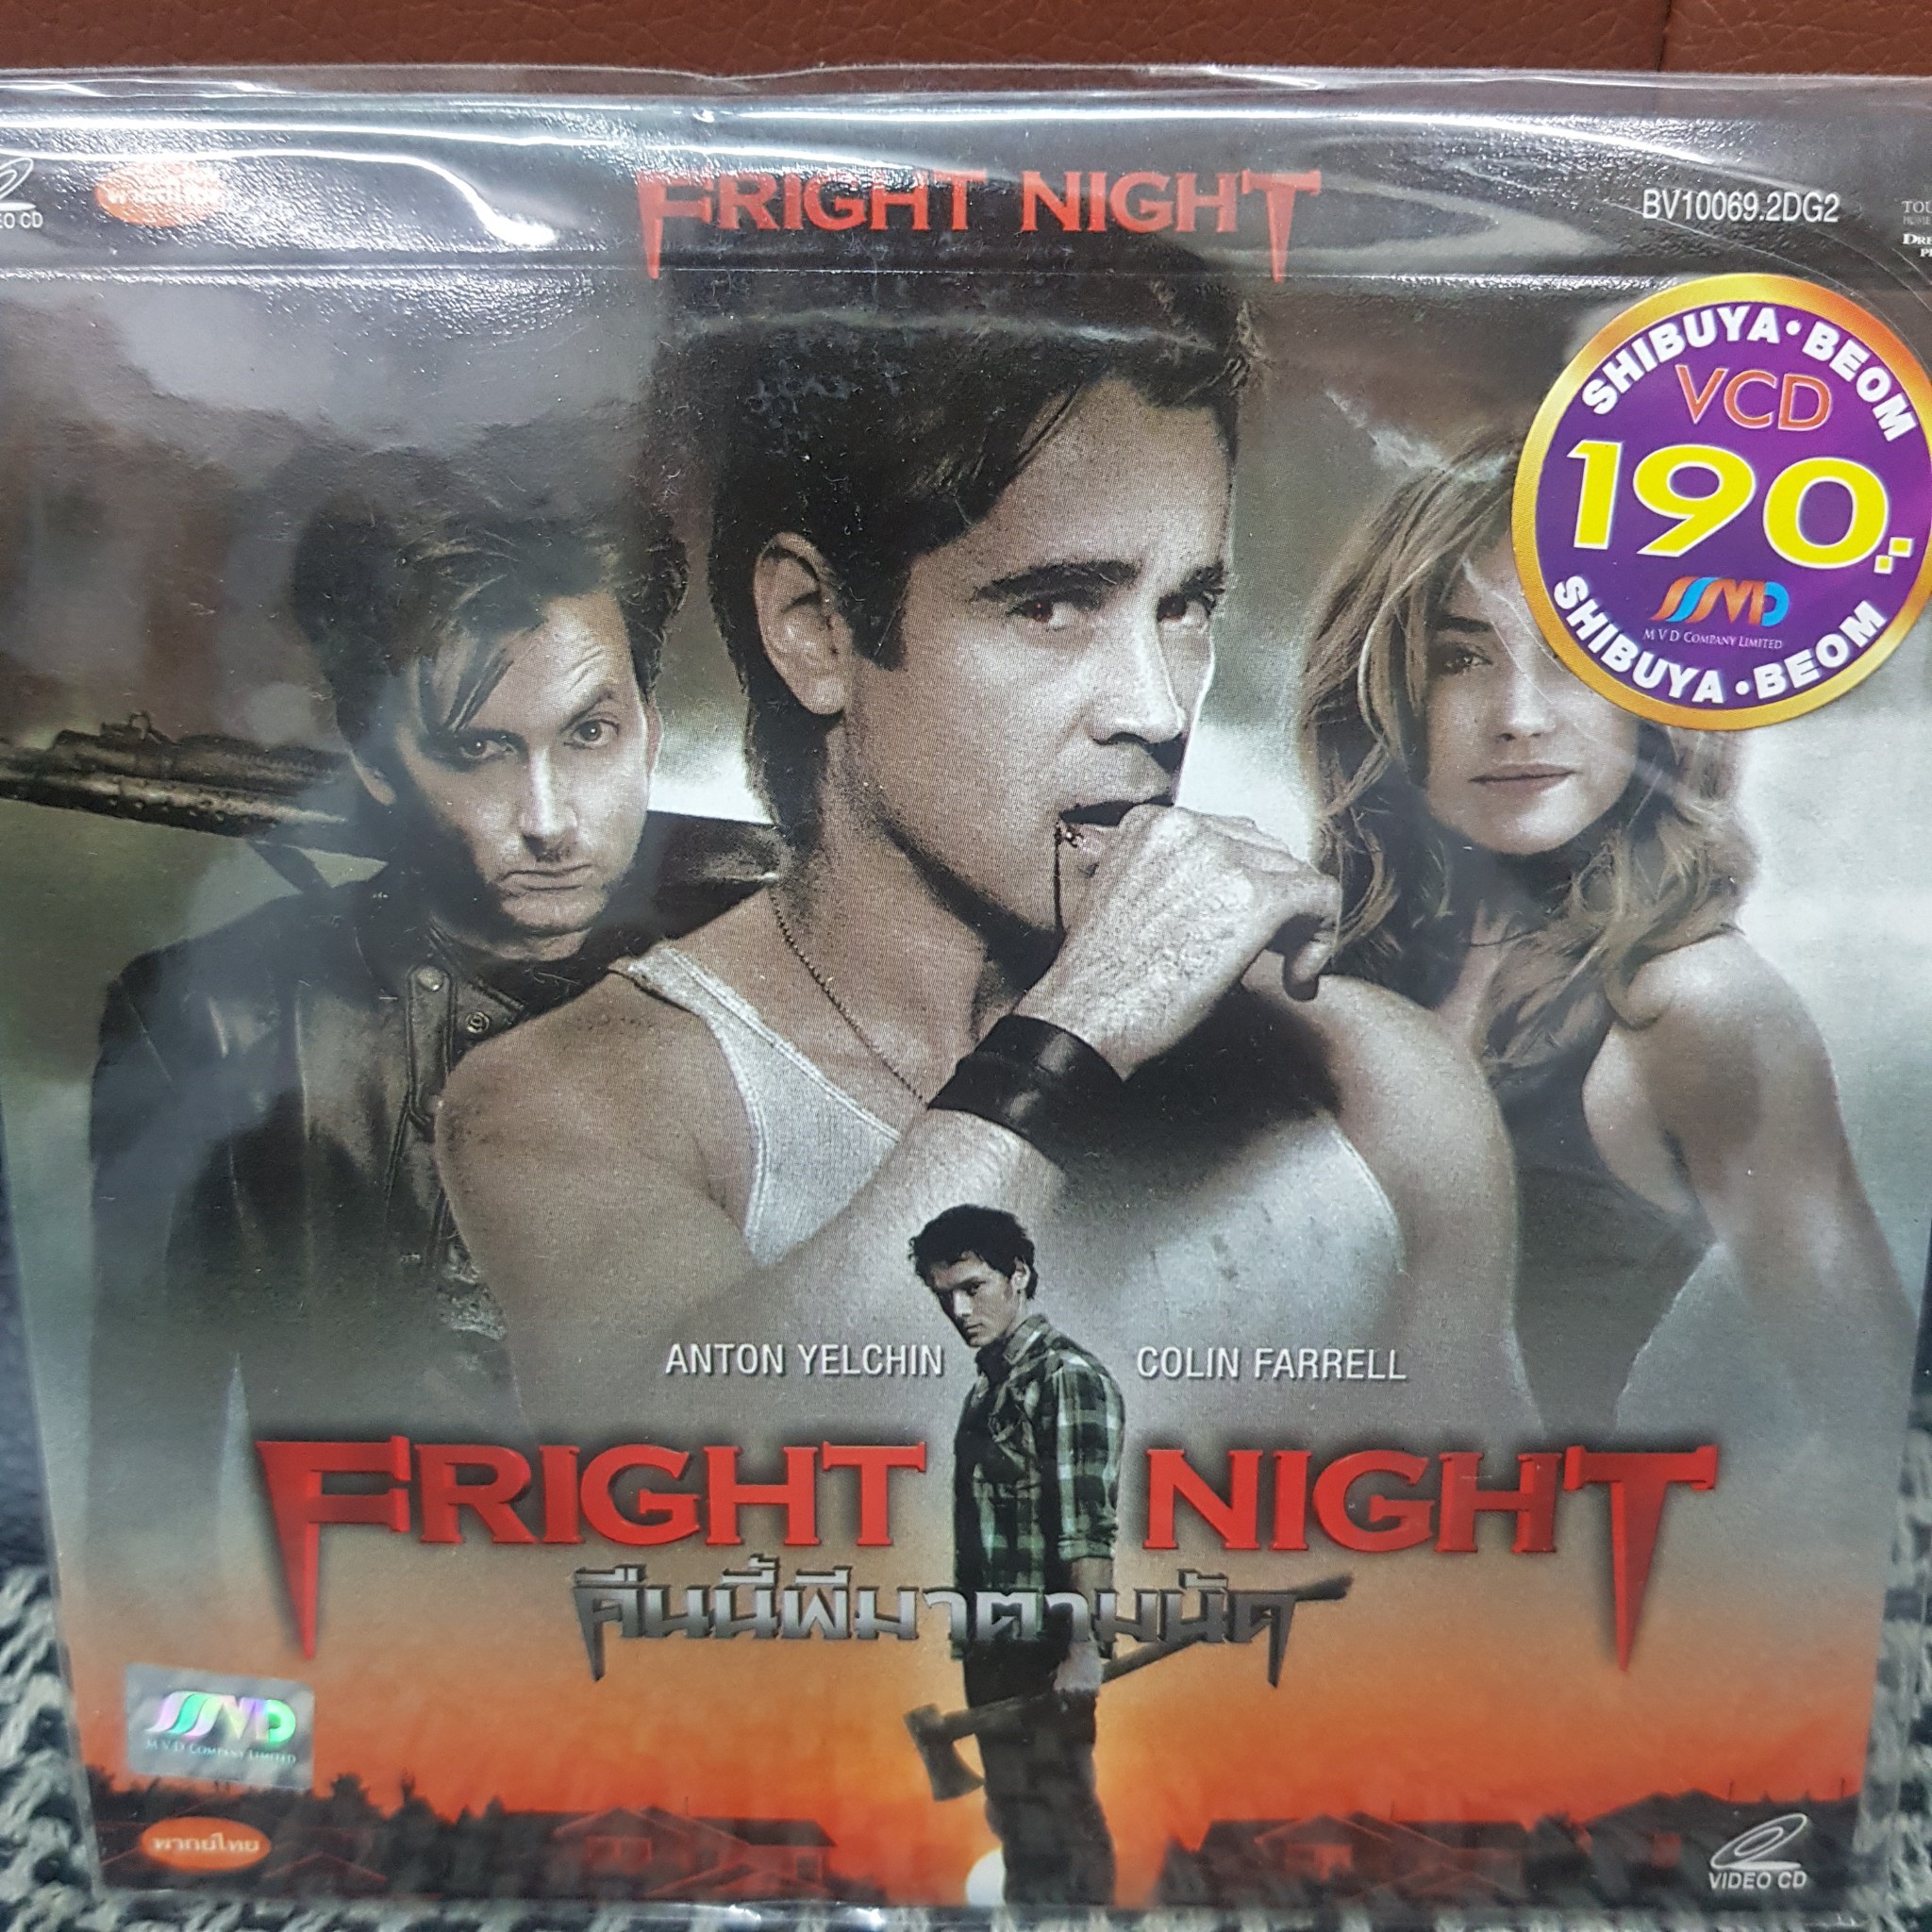 VCDหนัง FRIGHT NIGHT คืนนี้ผีมาตามนัด พากย์ไทย (SBYVCD2020-คืนนี้ผีมาตามนัด) ซอมบี้ zombi ผี ระทึกขวัญ แผ่นหนัง สะสม หนังโรงภาพยนตร์ ภาพยนตร์ หนังไทยเก่า หนัง งาน2020 cinema vcd วีซีดี STARMART